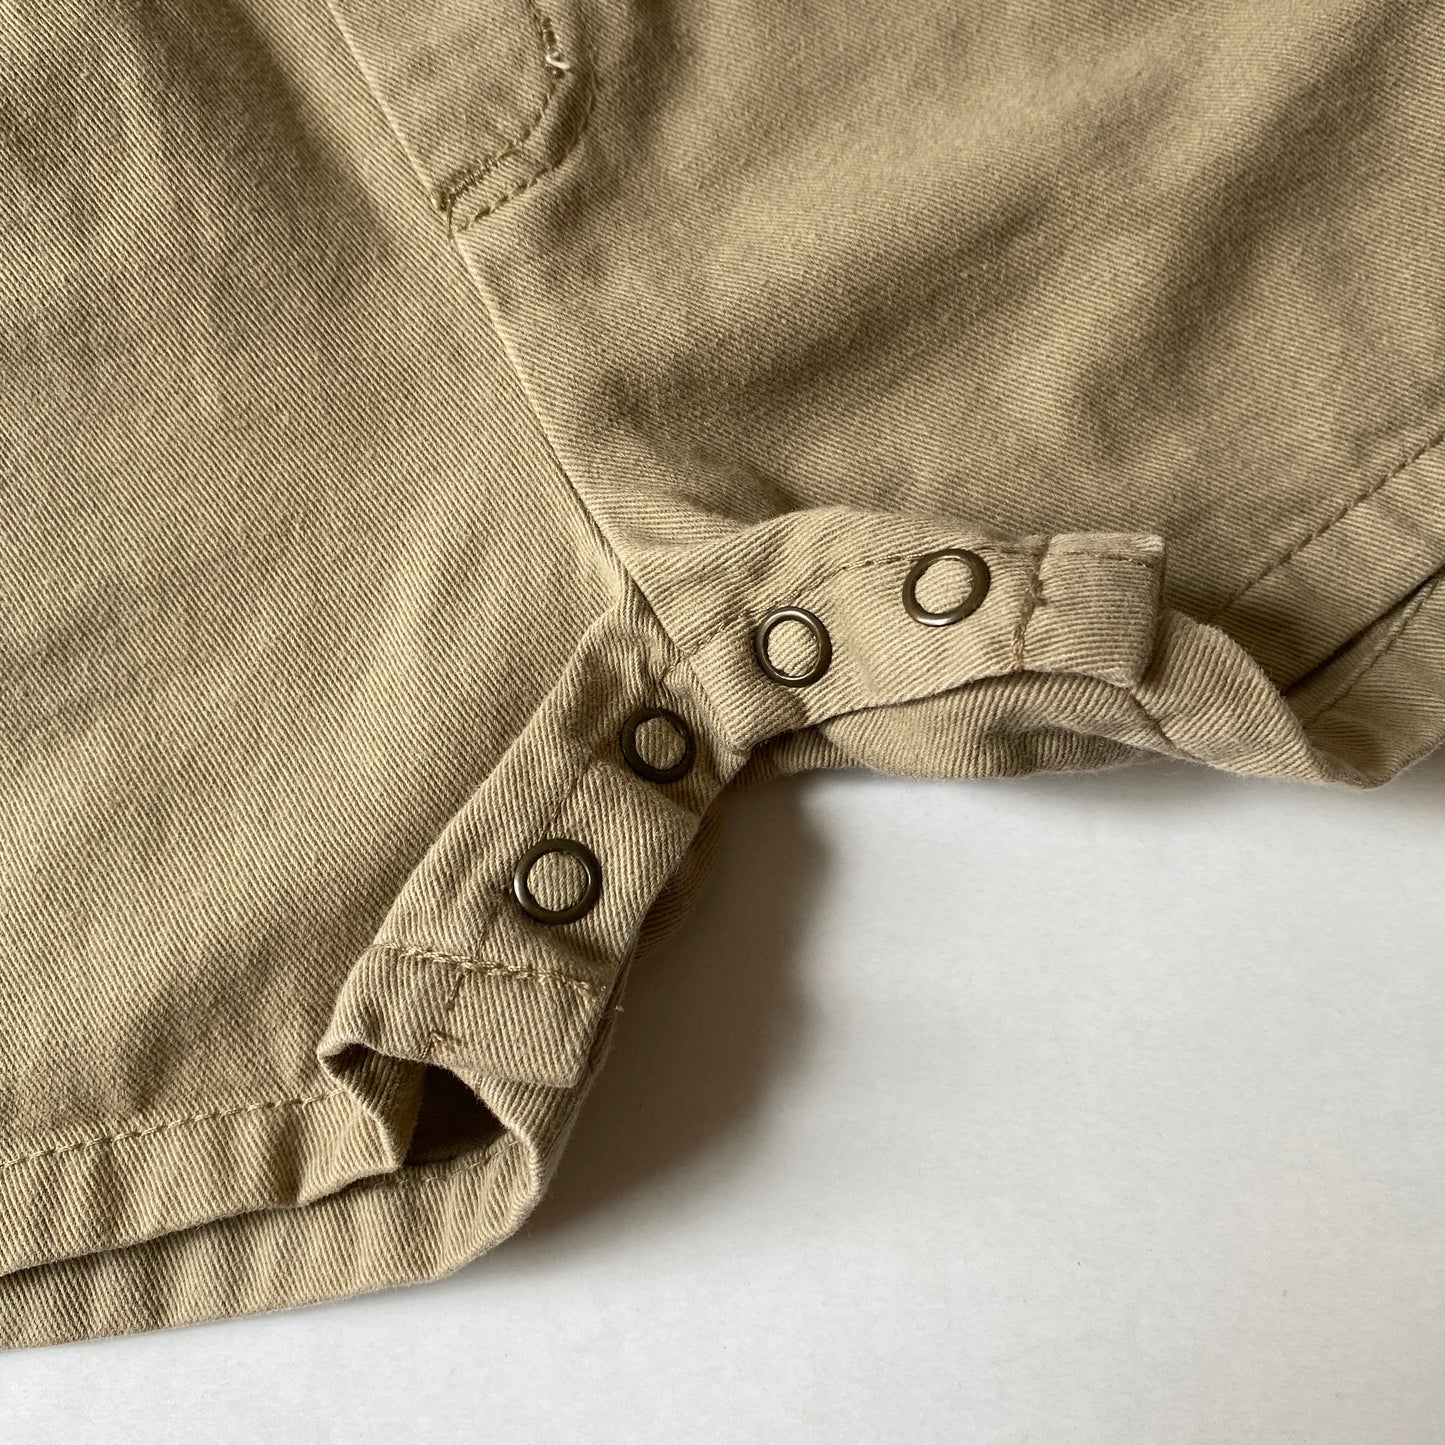 Vintage Baby Guess Khaki Shorts (3M)